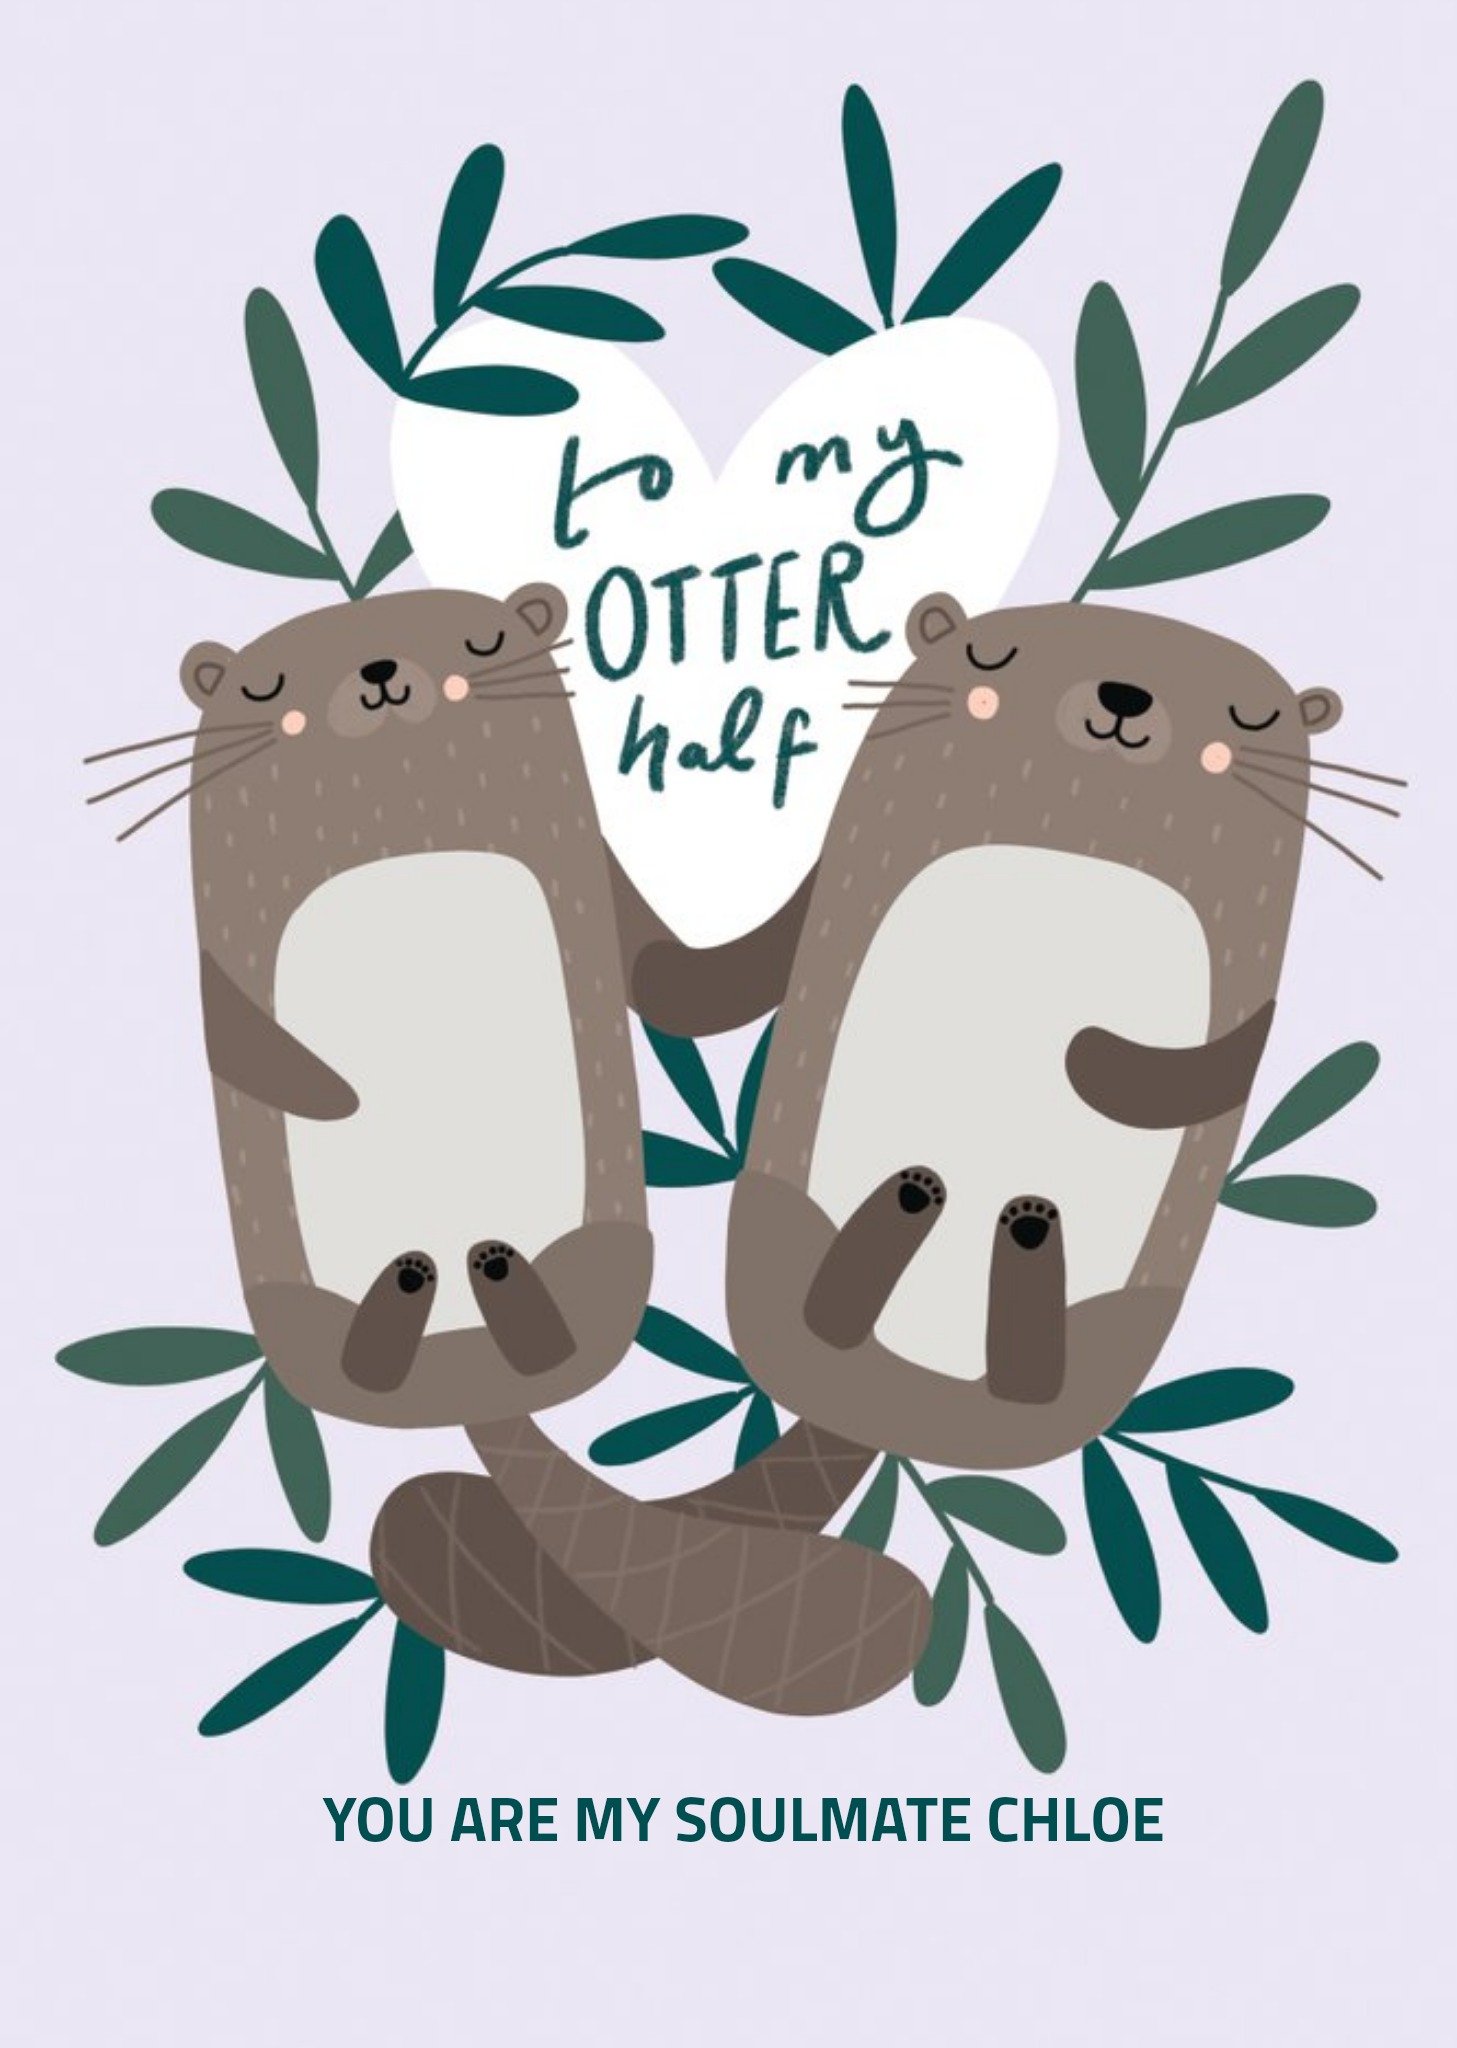 Moonpig To My Otter Half Cute Otter Illustration Card Ecard